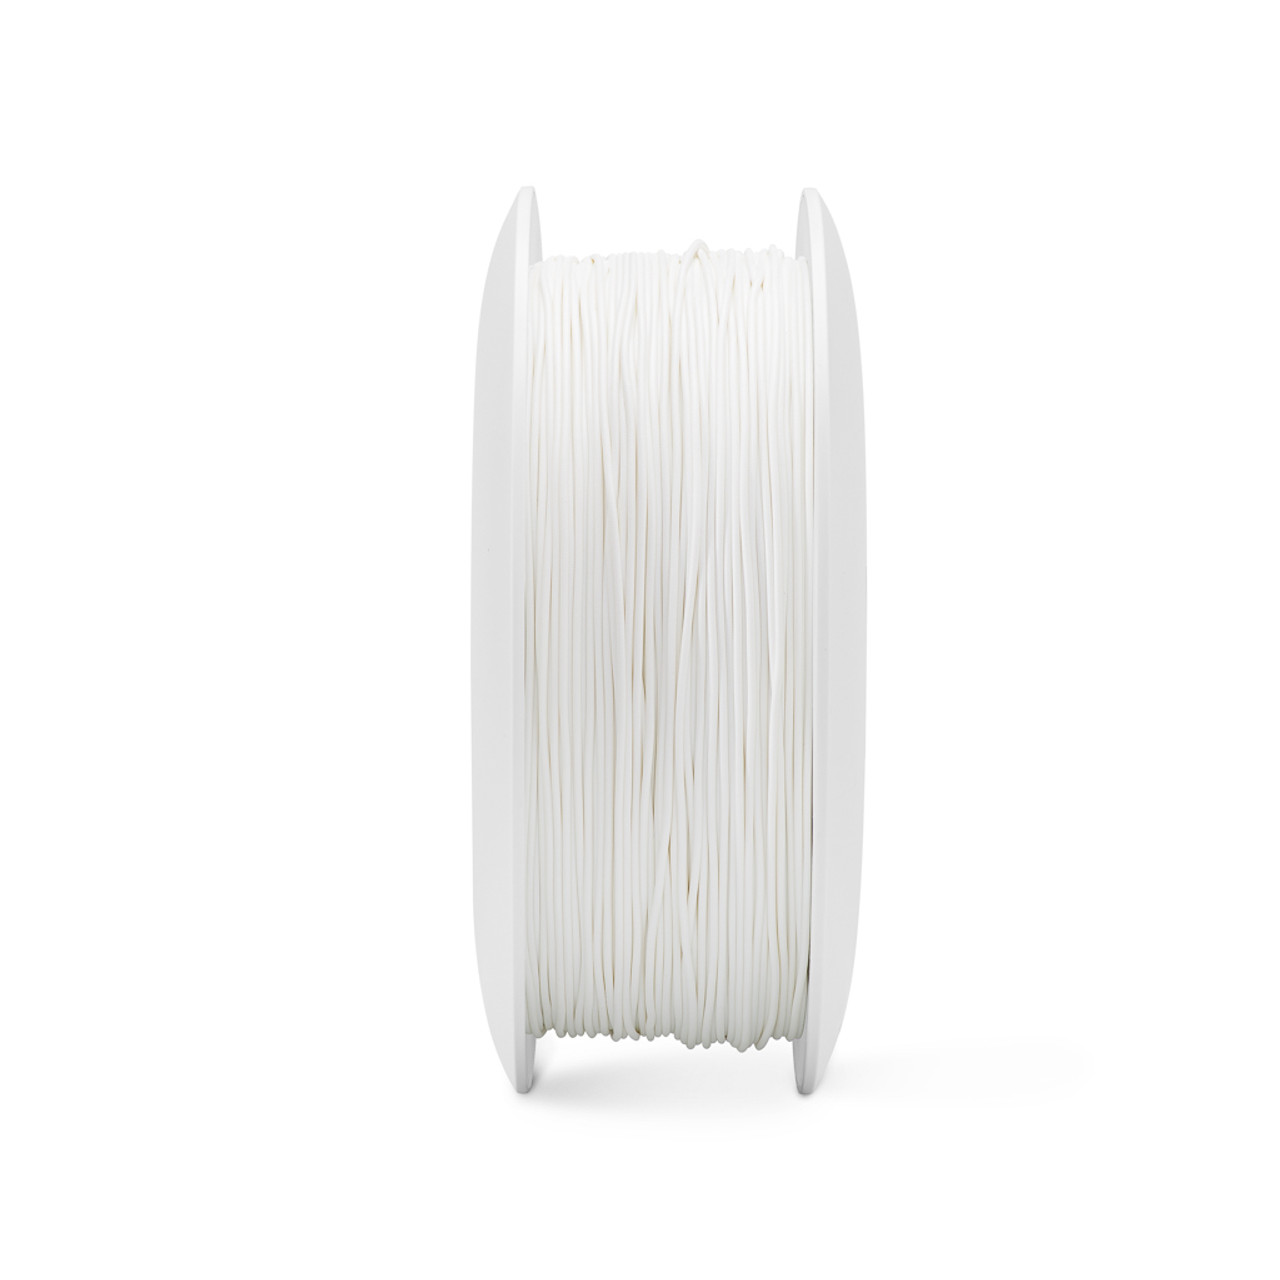 Fiberlogy Fiberflex 30D White 3D Printing Filament